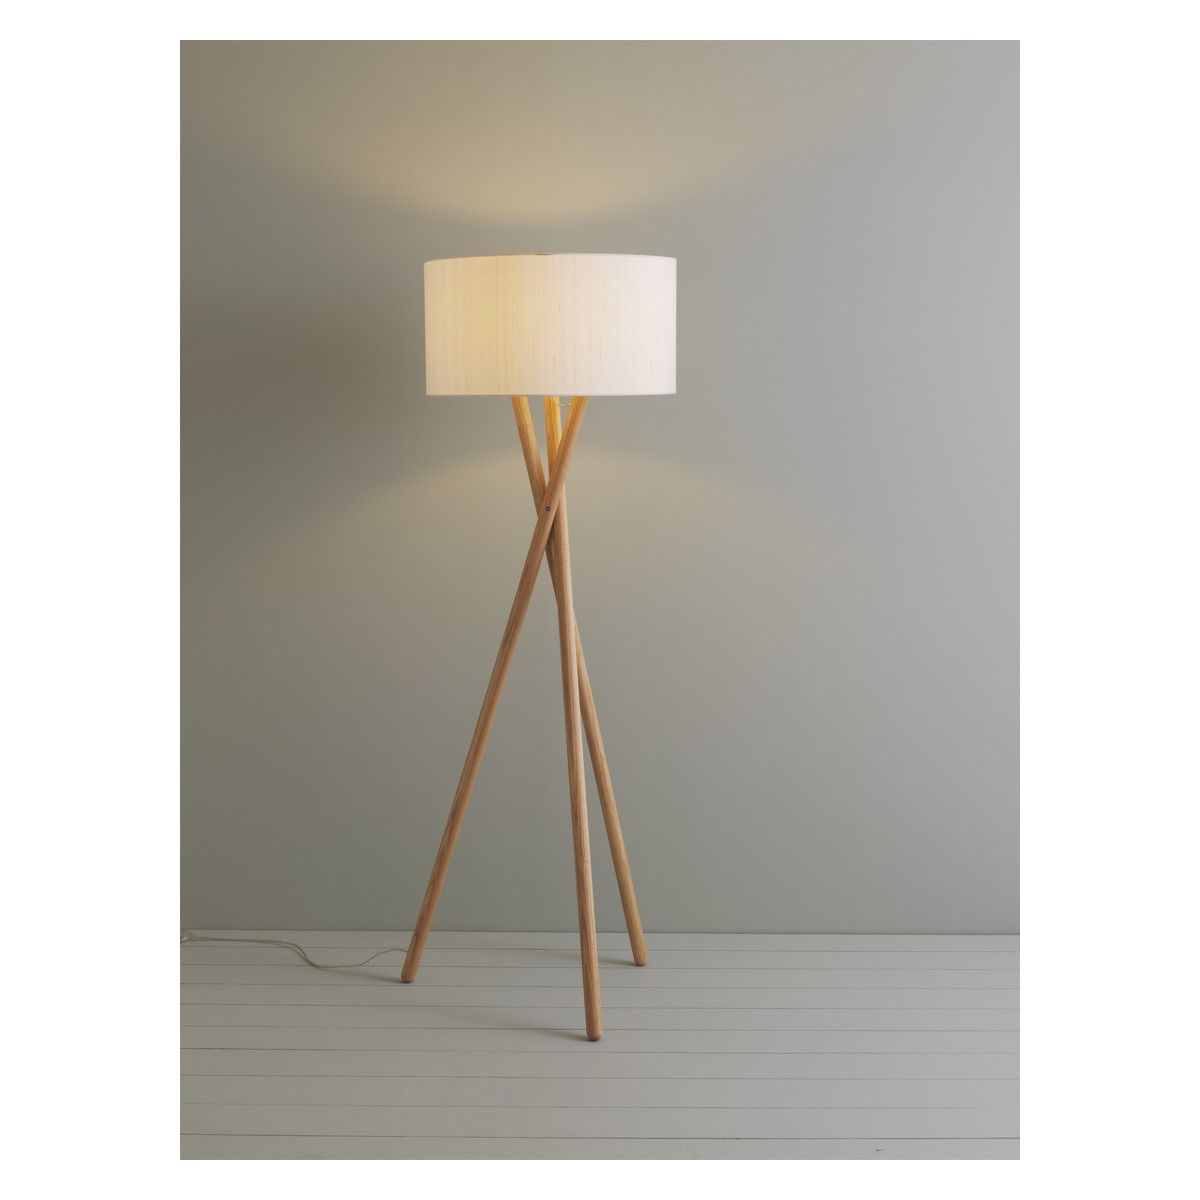 Lansbury Base Ash Wooden Tripod Floor Lamp Wooden Tripod pertaining to size 1200 X 1200